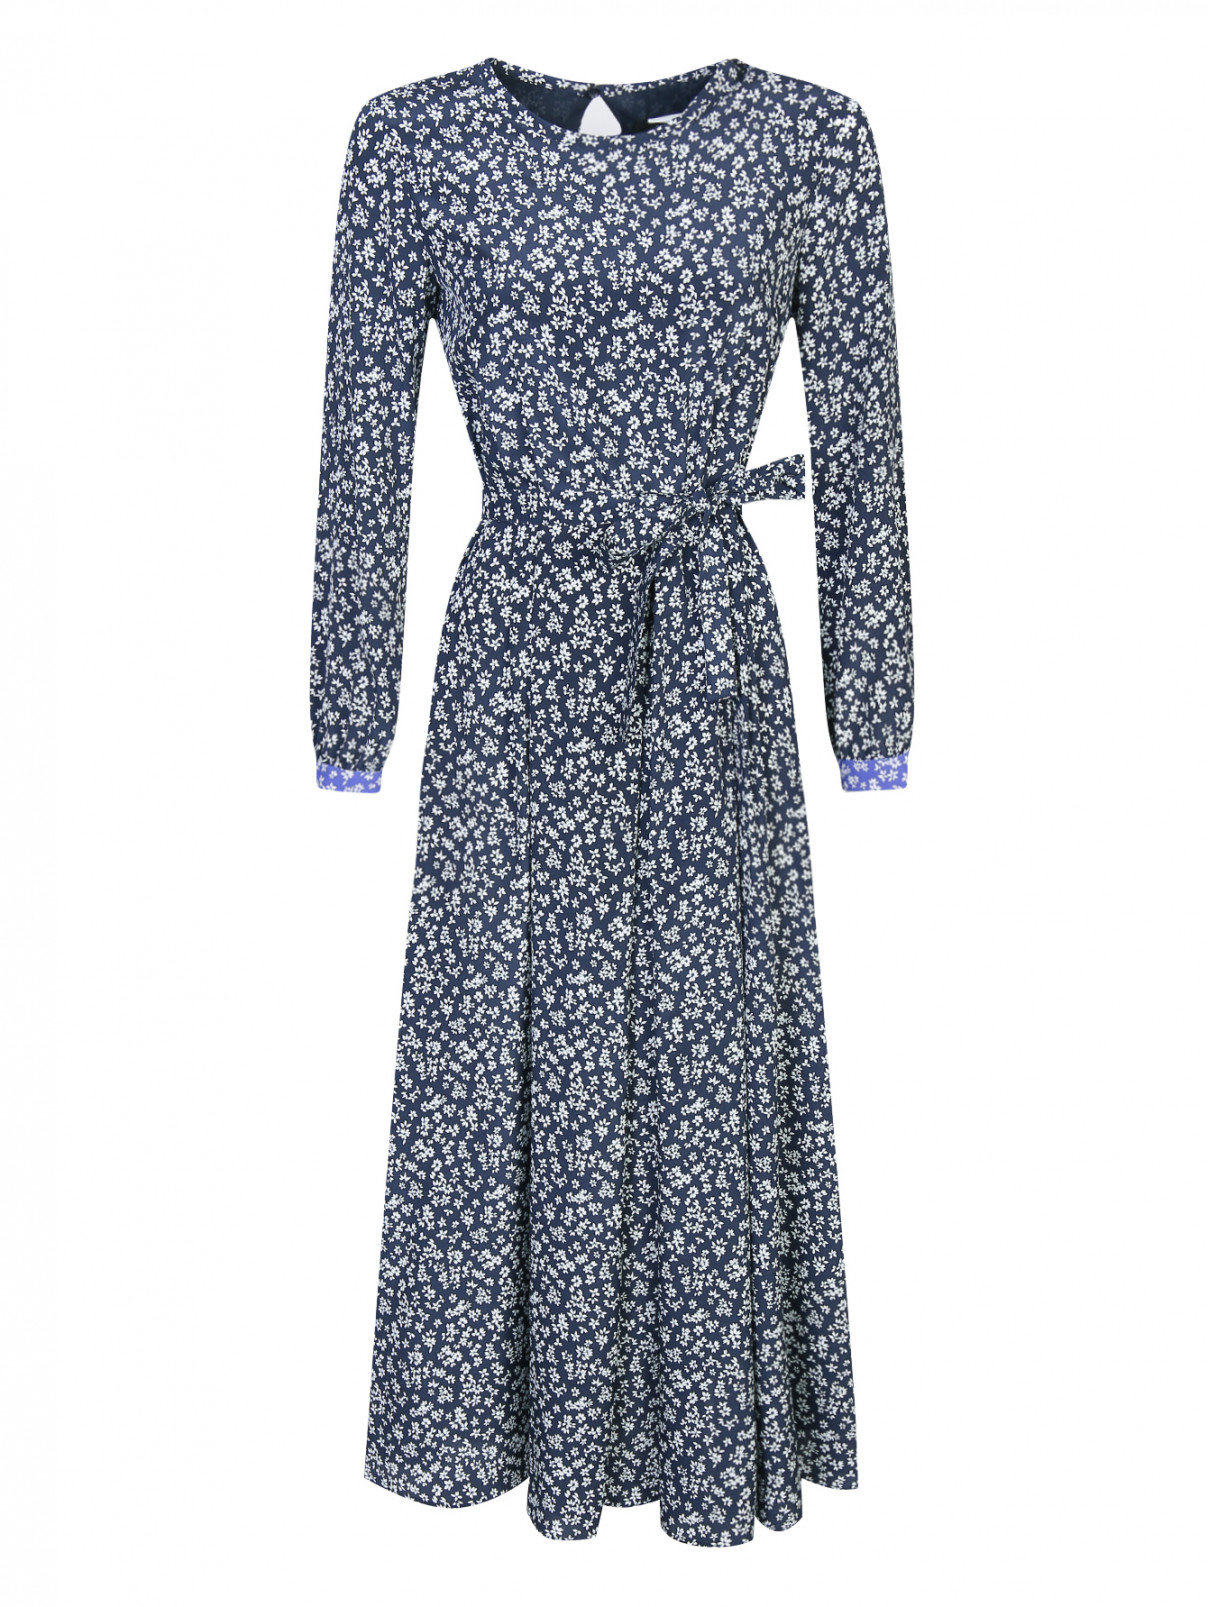 Платье-миди из шелка с узором Weekend Max Mara  –  Общий вид  – Цвет:  Синий